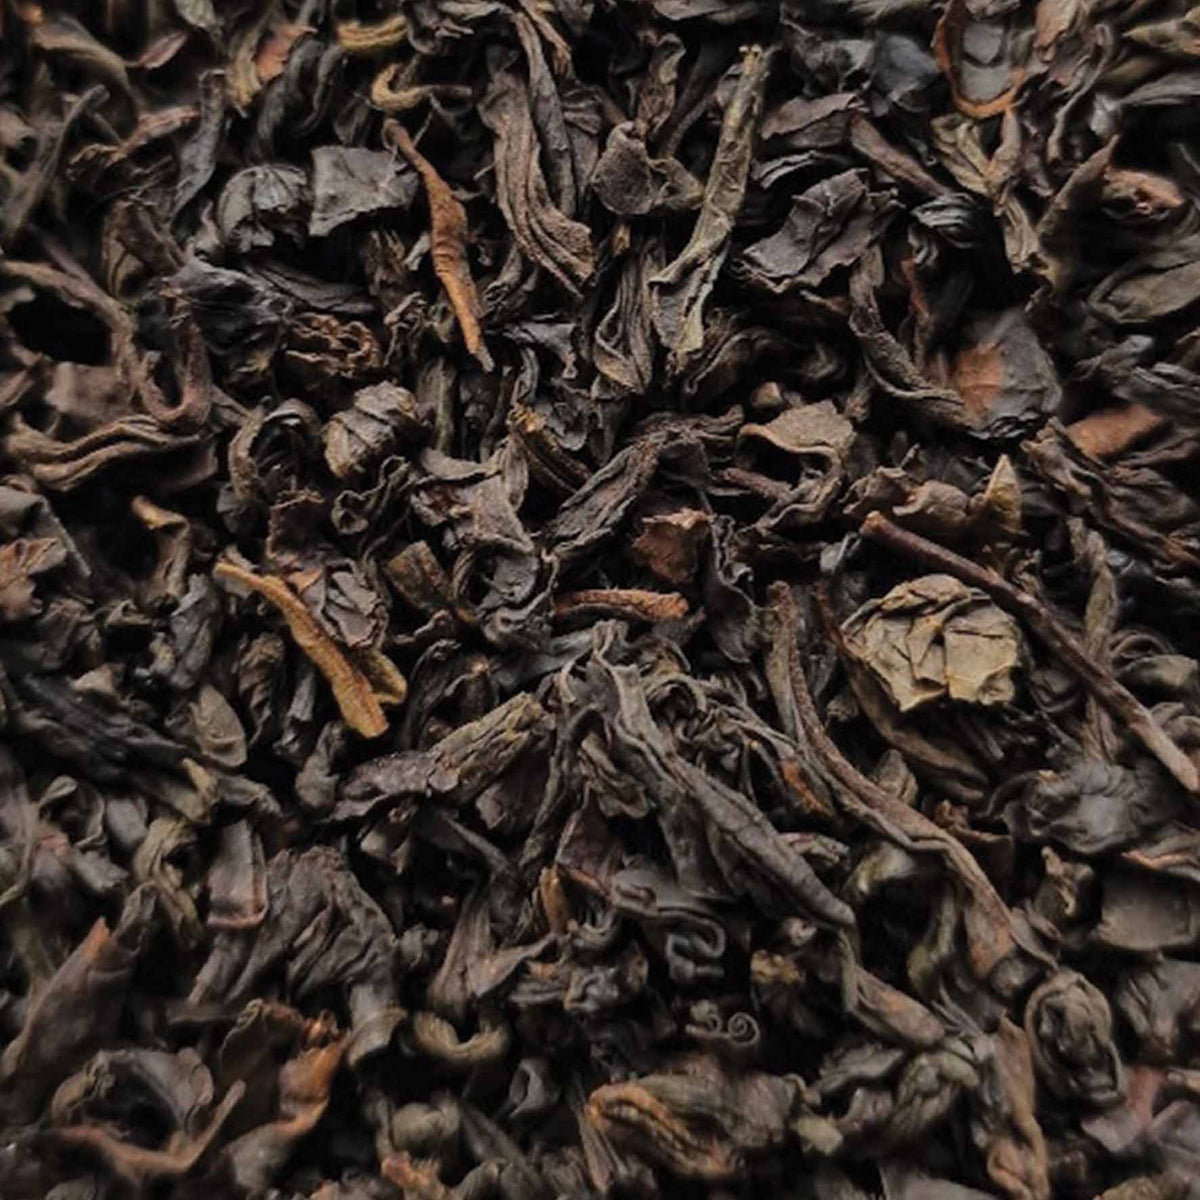 Lapsang Souchong Black Loose Leaf Tea - tea leaves